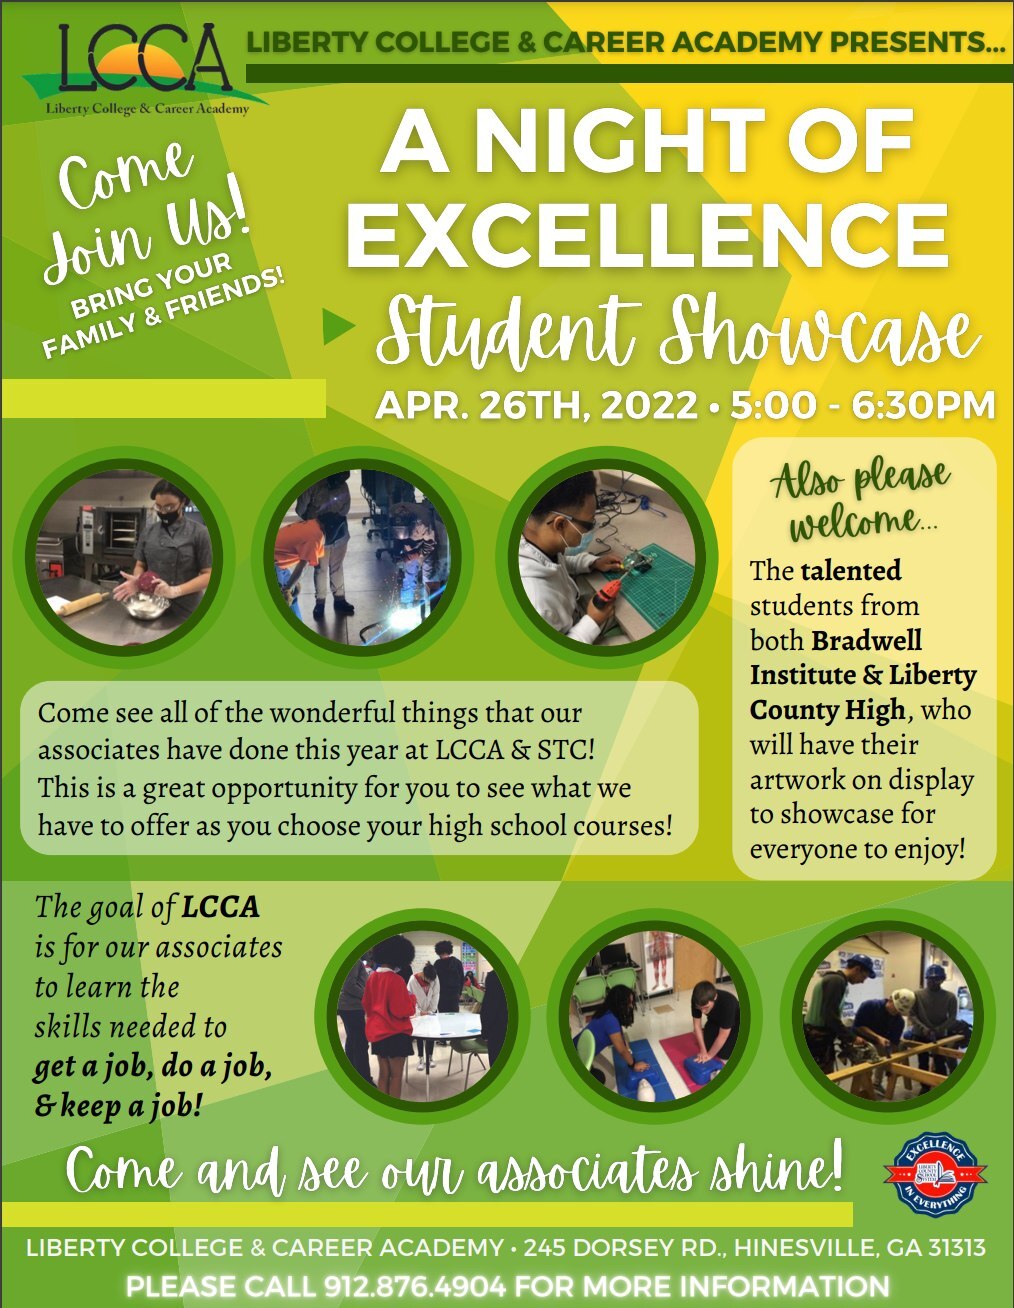 Student showcase flyer